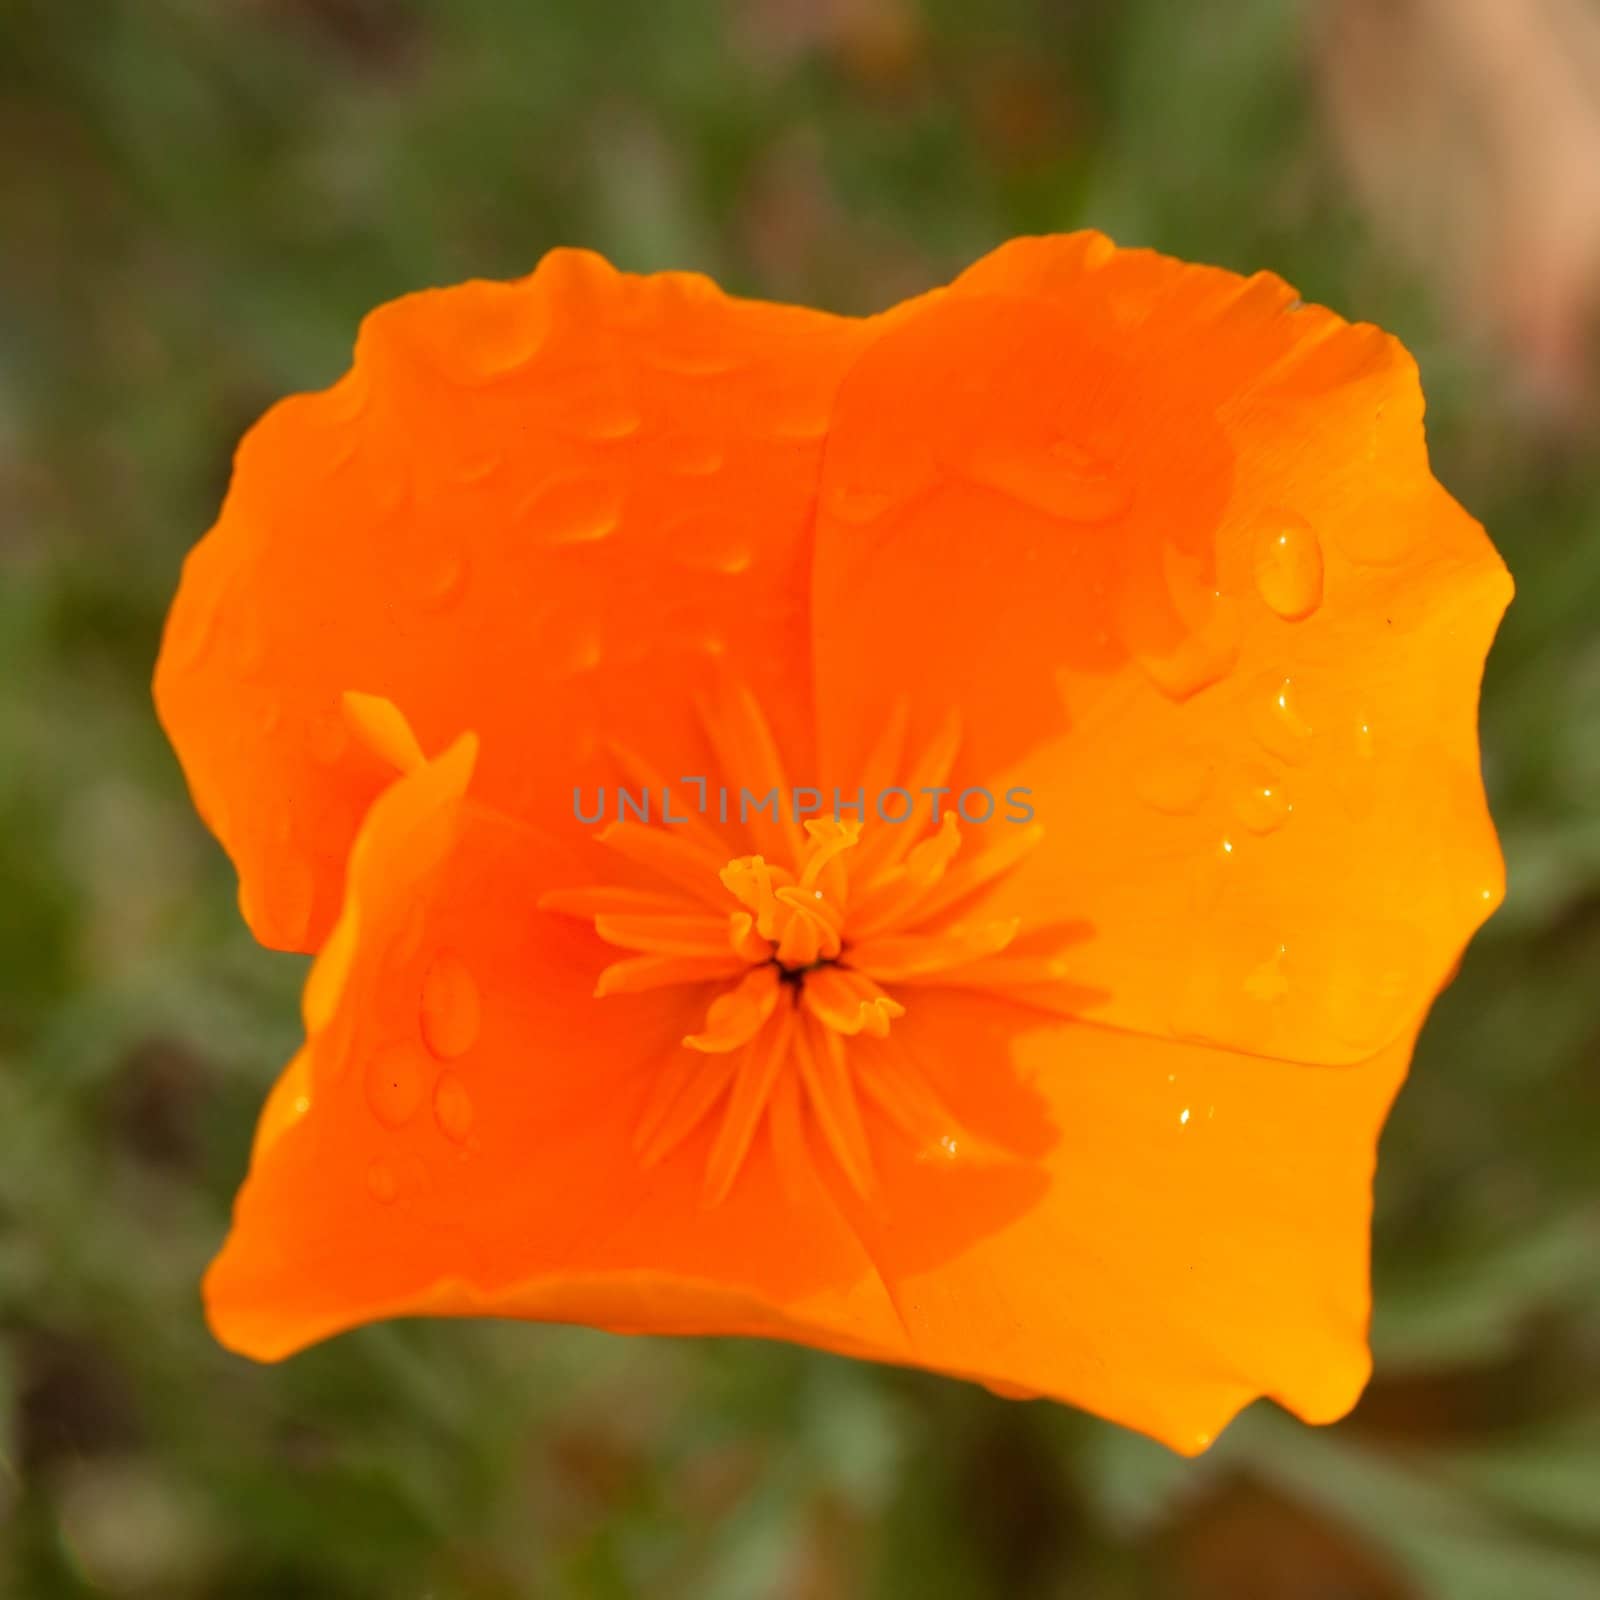 California poppy by melastmohican